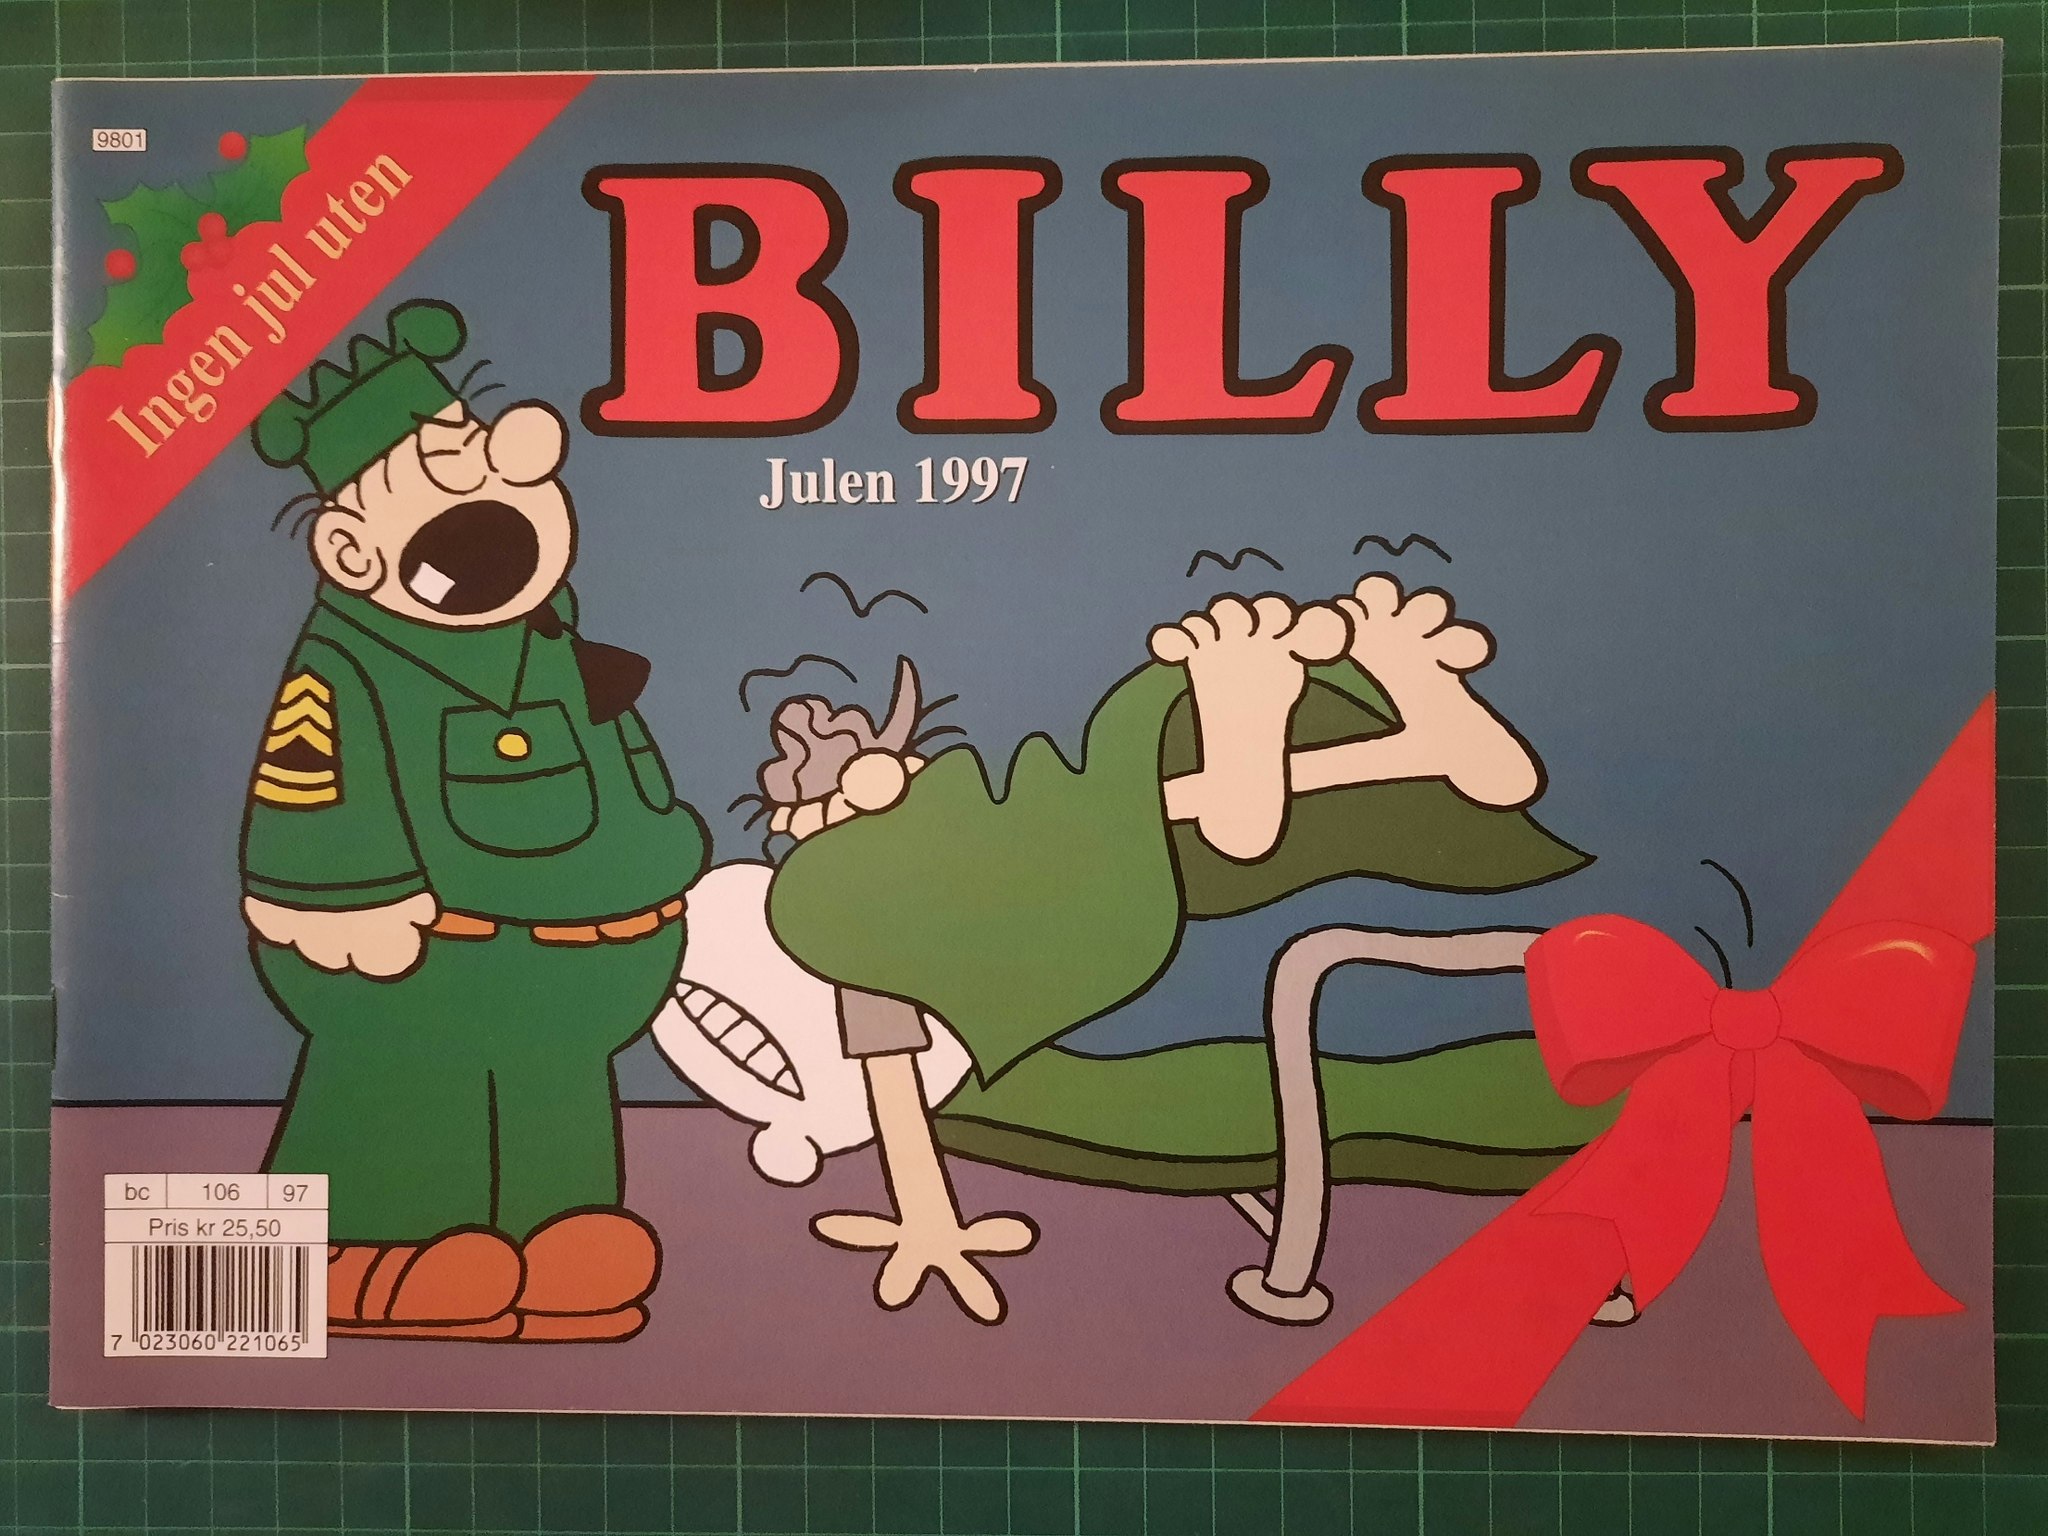 Billy Julen 1997